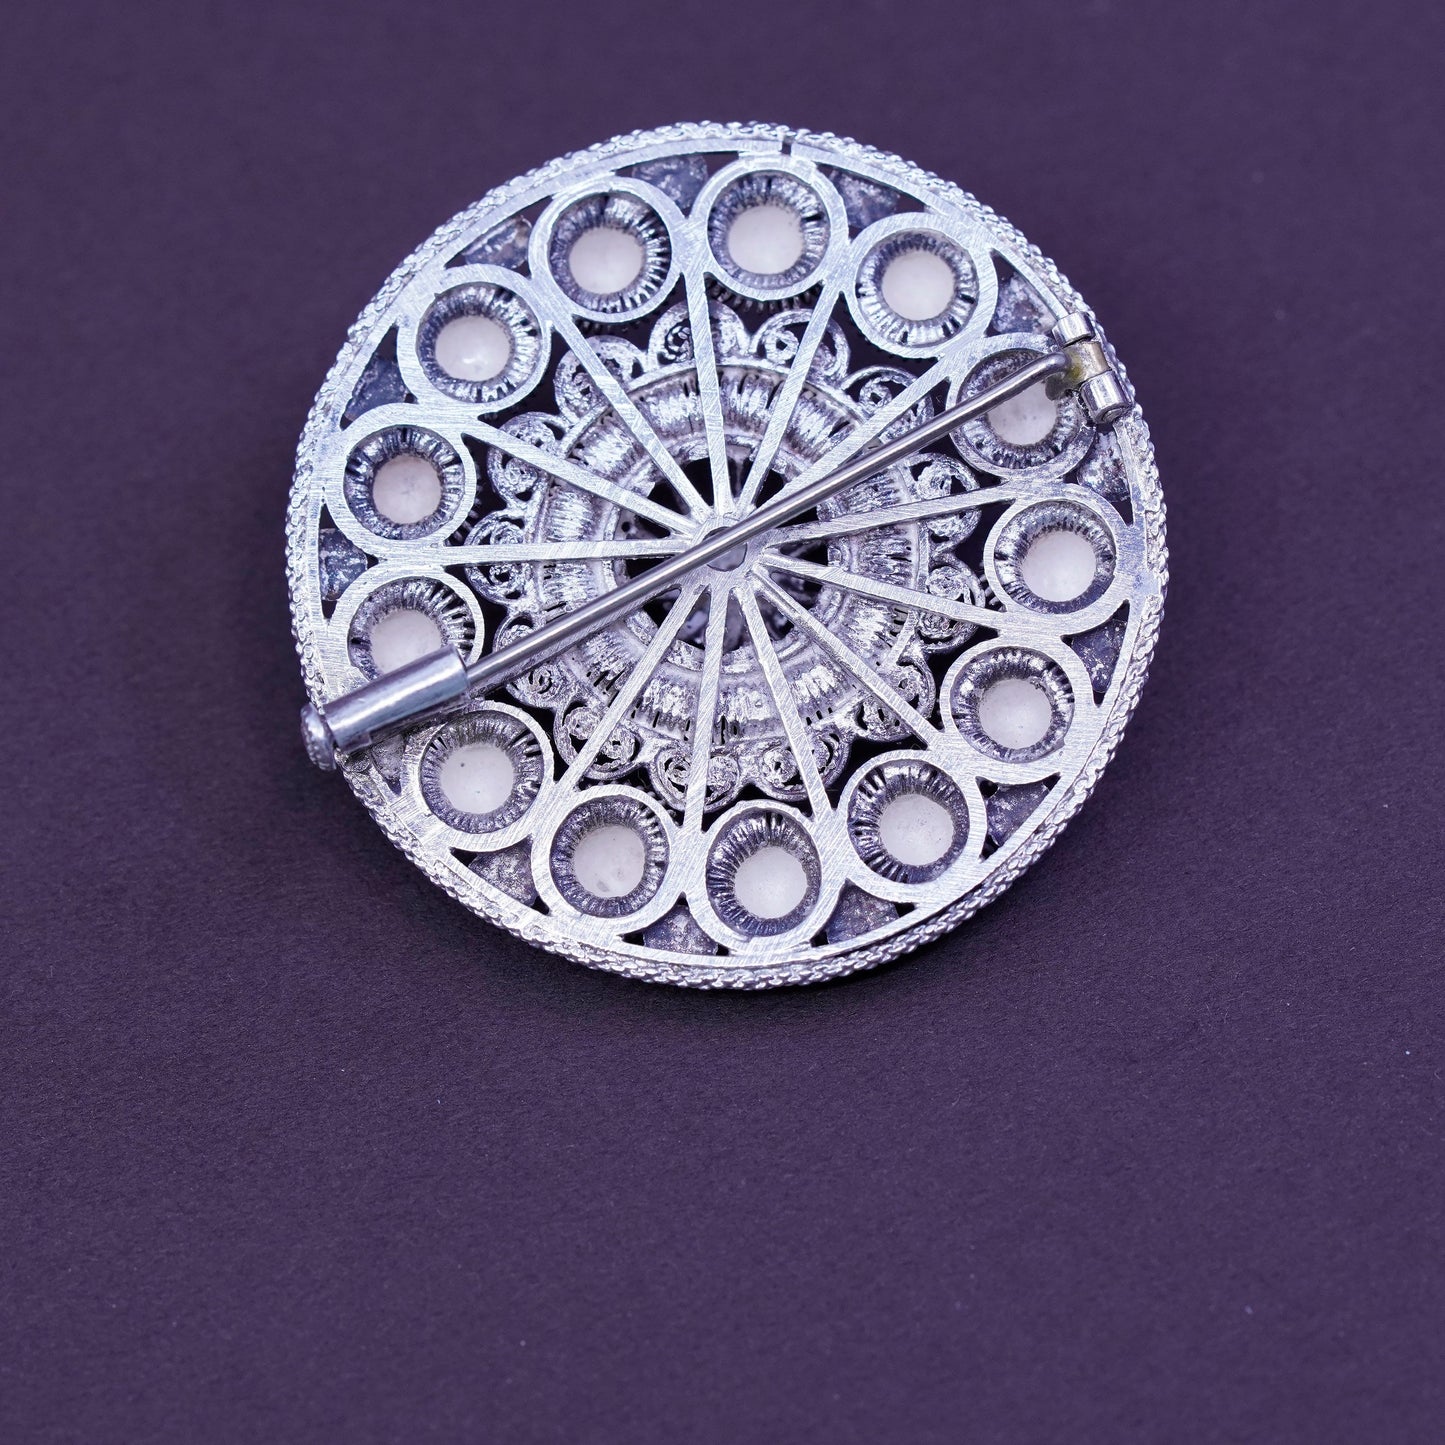 Vintage handmade sterling silver round shaped filigree bead brooch